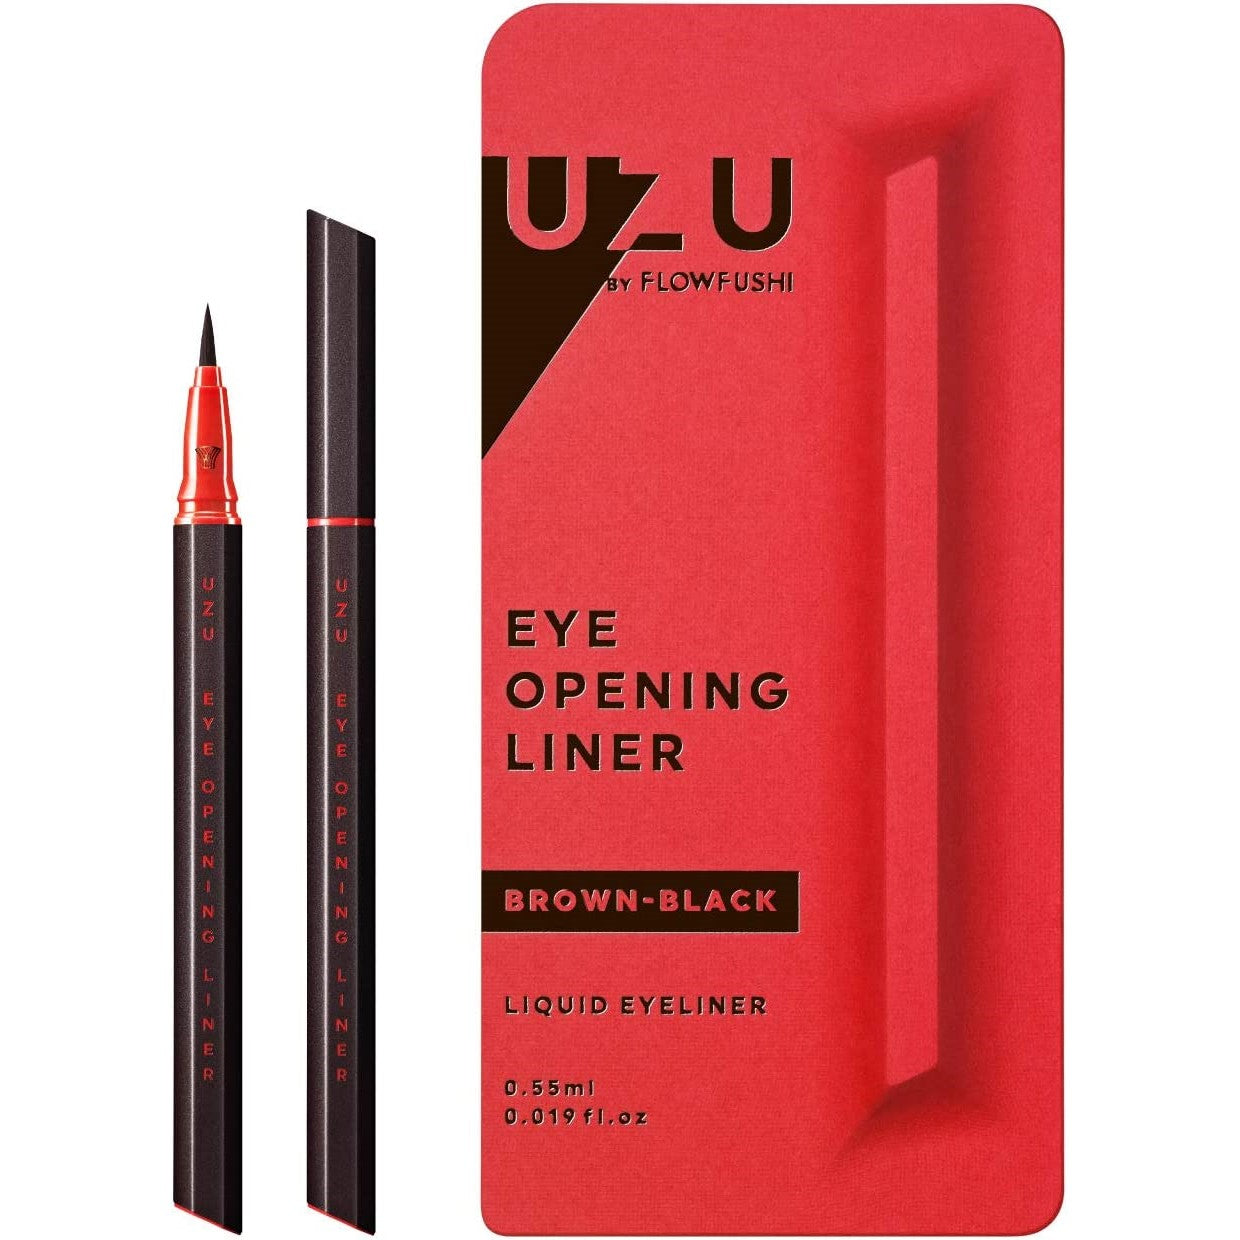 UZU Eyeliner By Flowfushi - Brownish Black (Made in Japan)